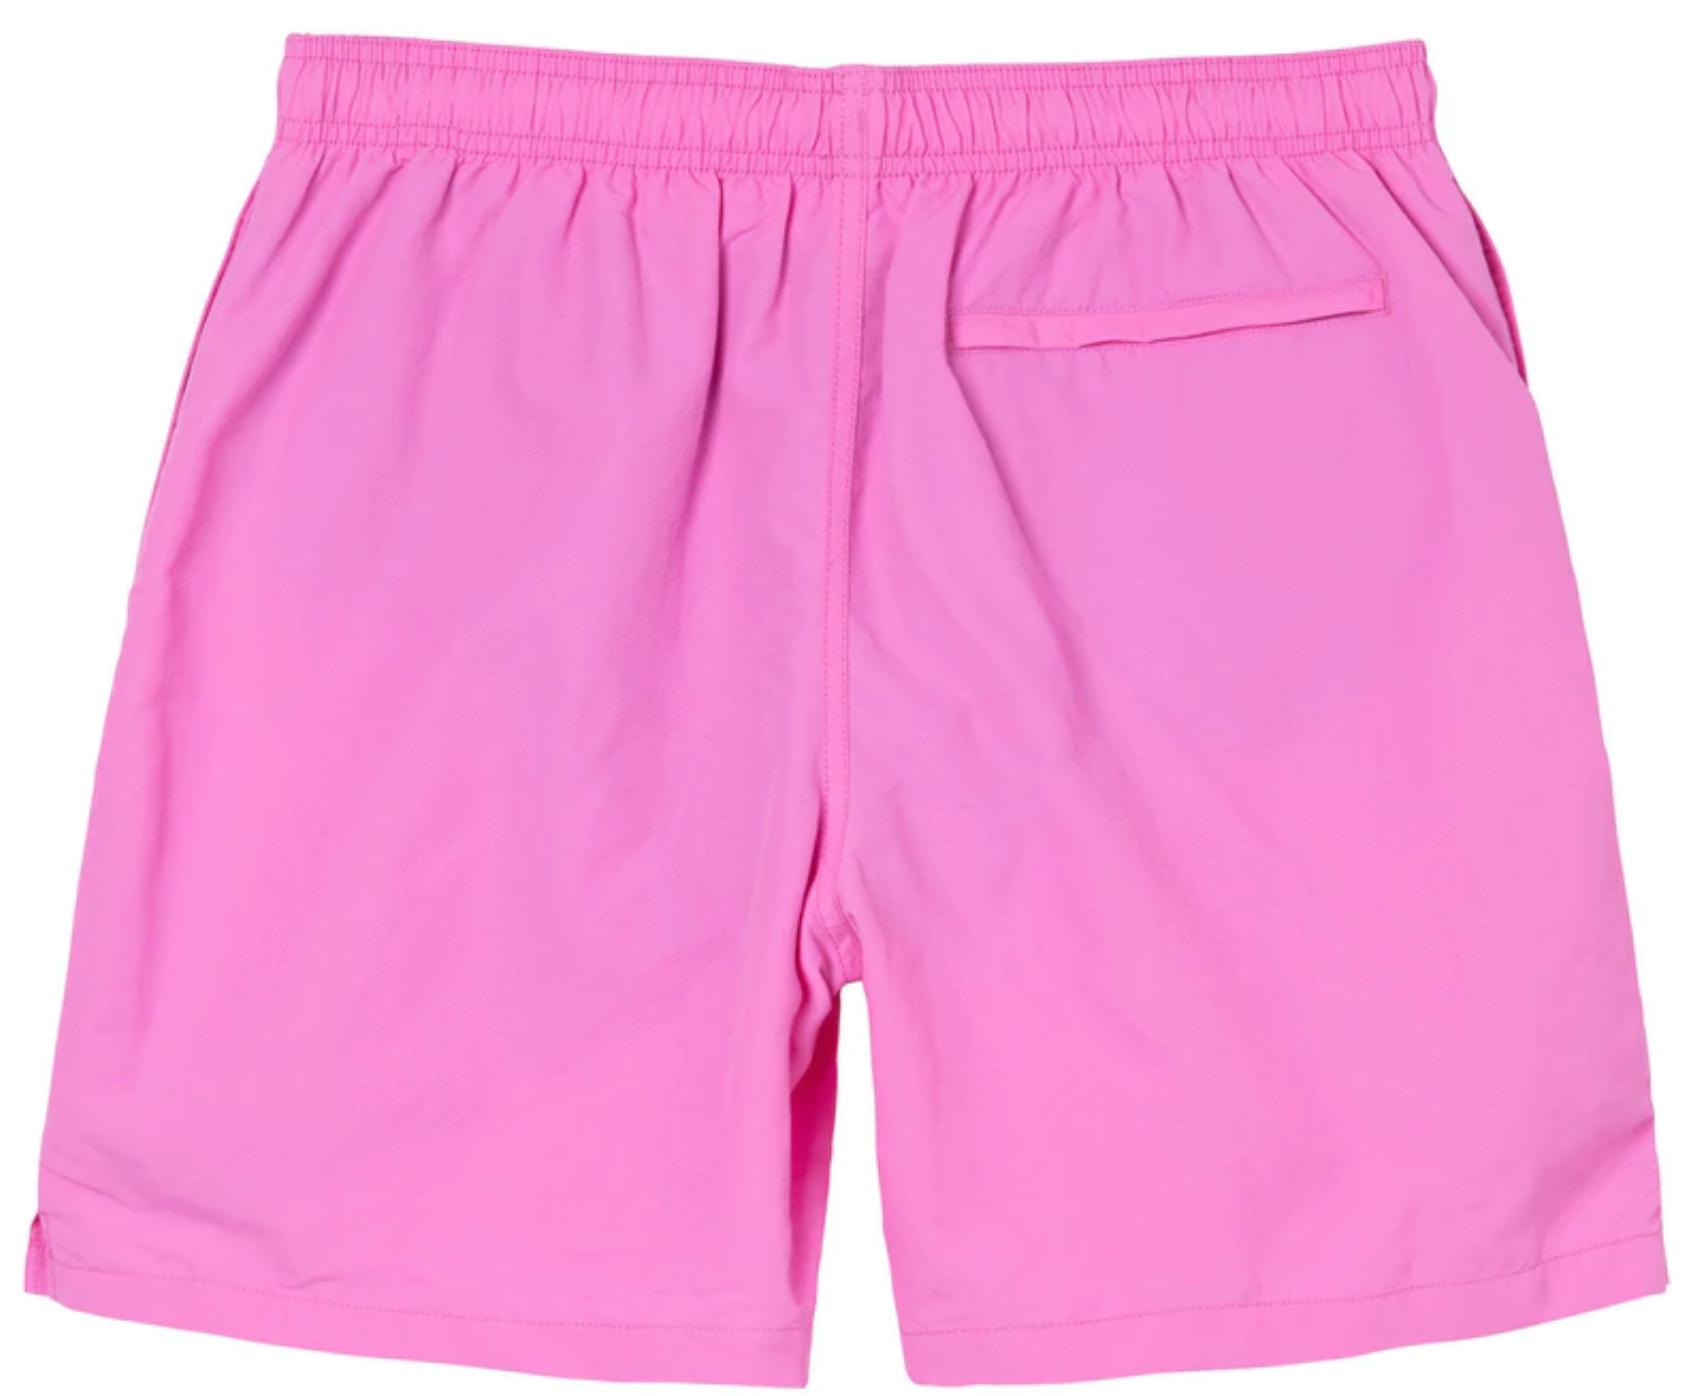 CPFM Women's Stussy X Water Shorts Pink